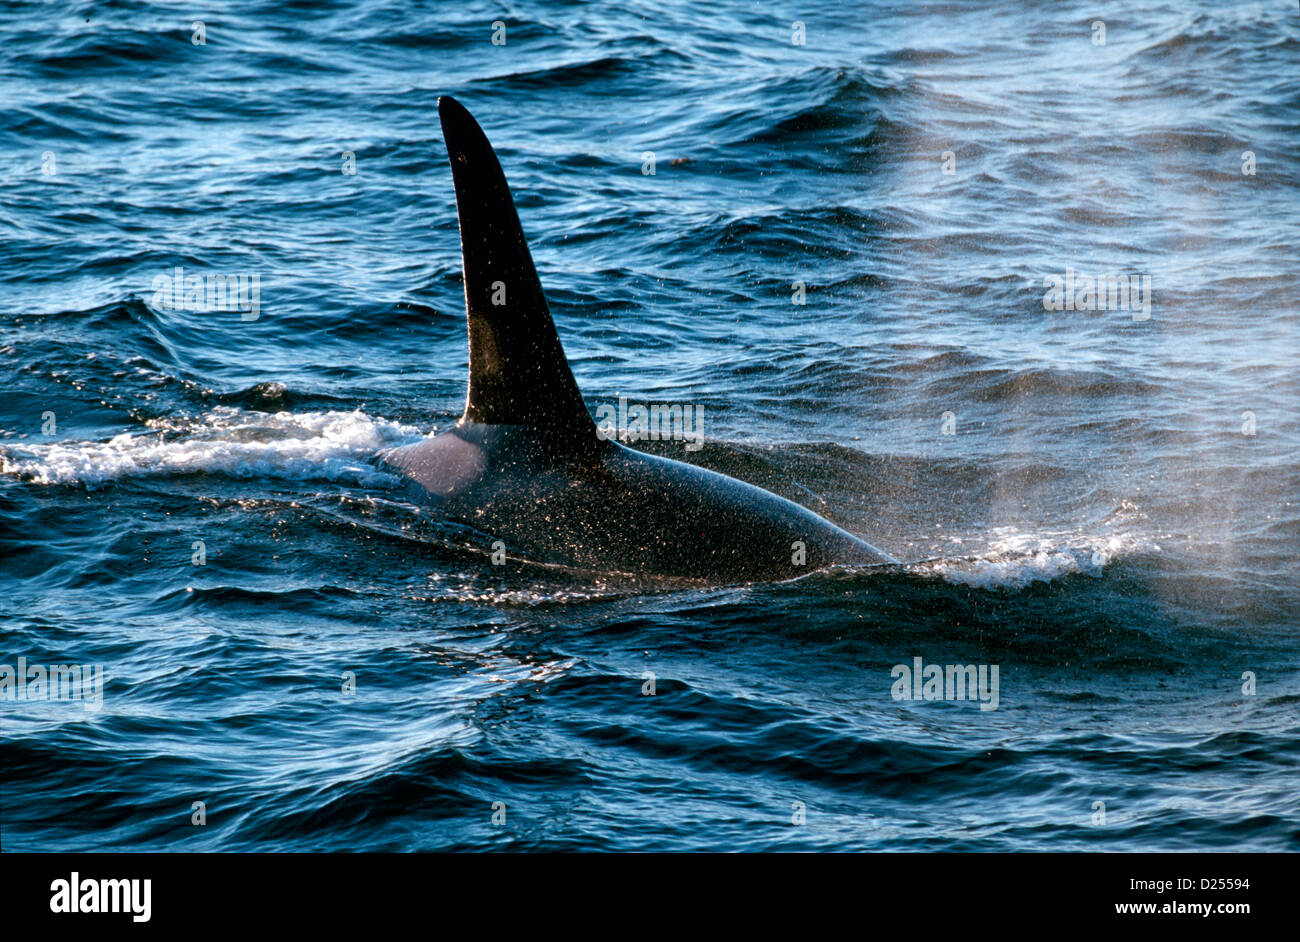 Orca (Killer Whale), Prince William Sound, Alaska Stock Photo